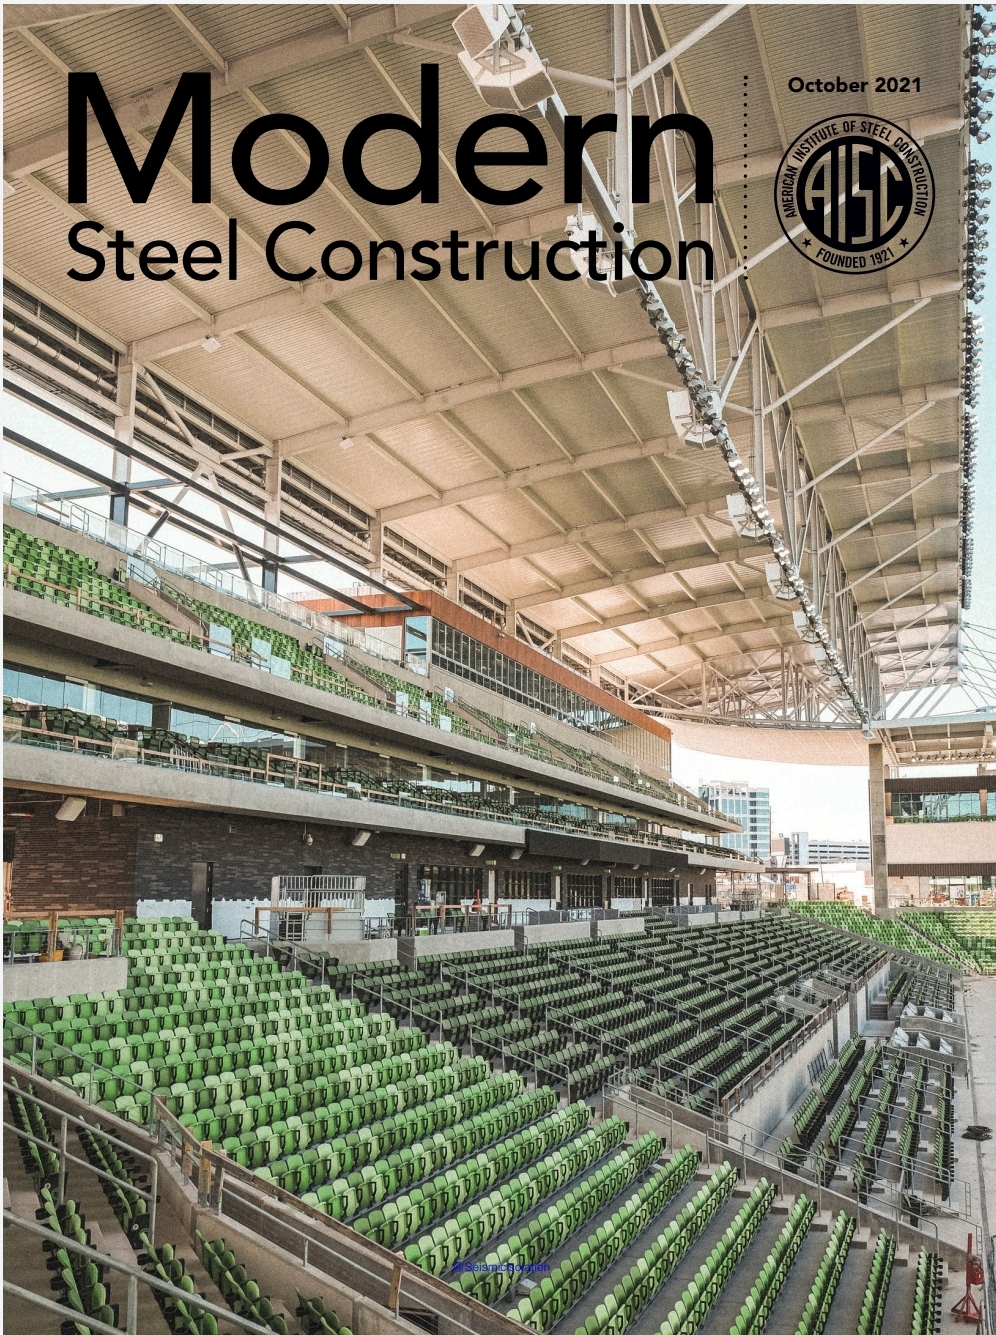 Modern Steel Construction